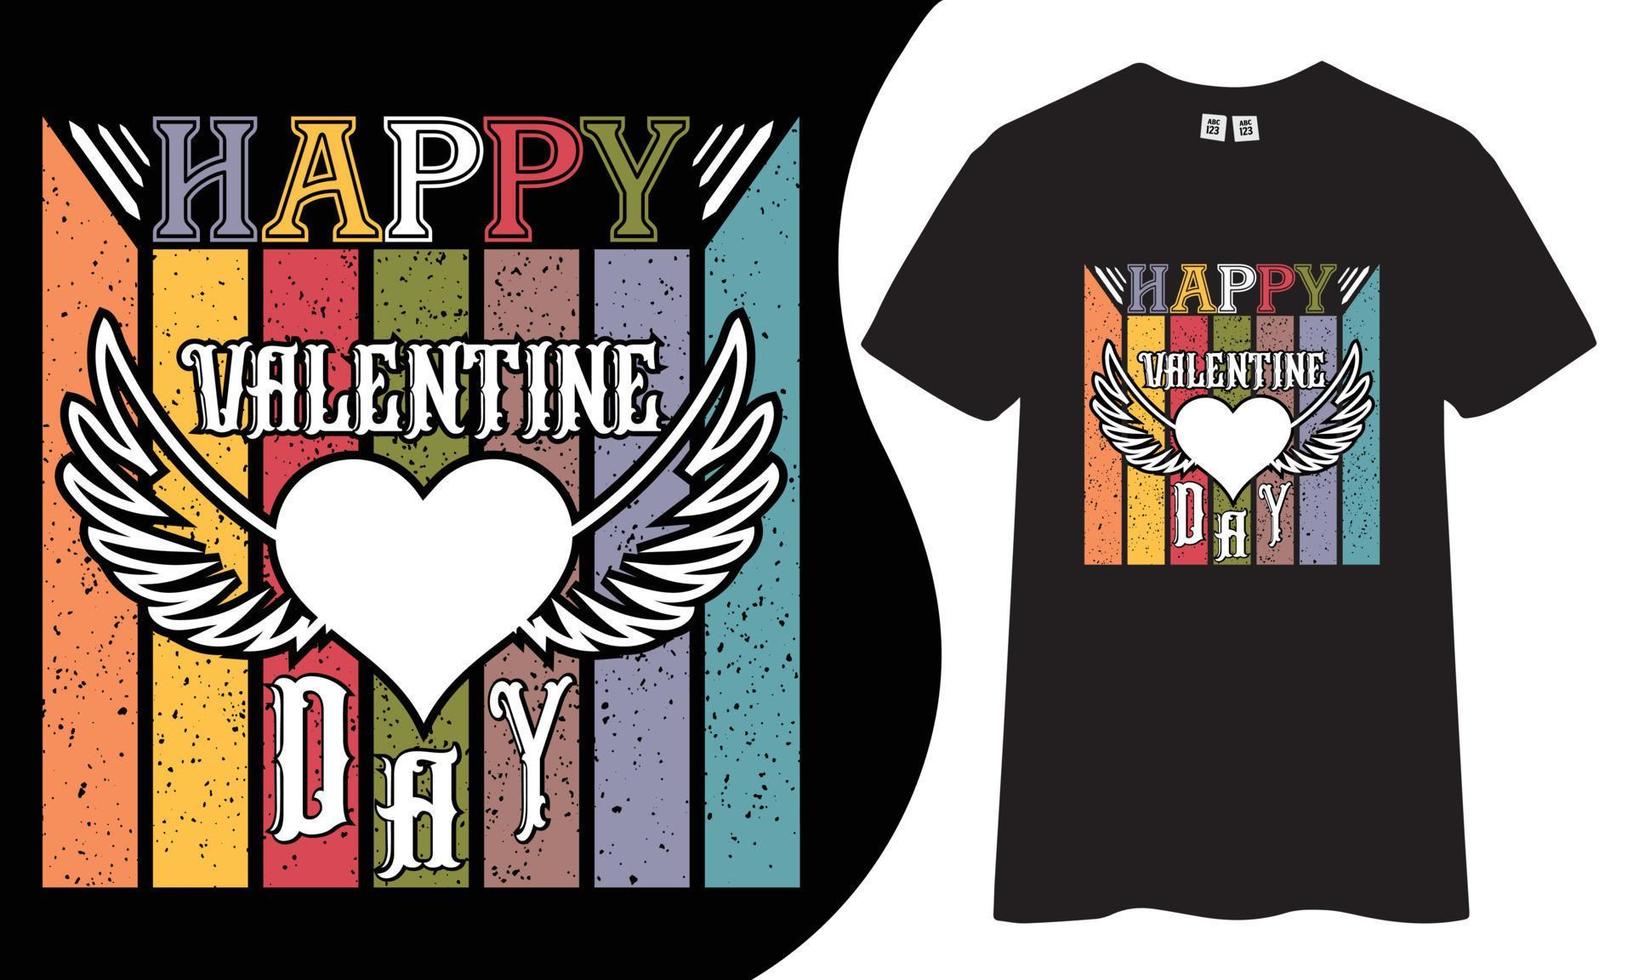 Happy valentine's day t-shirt design. vector